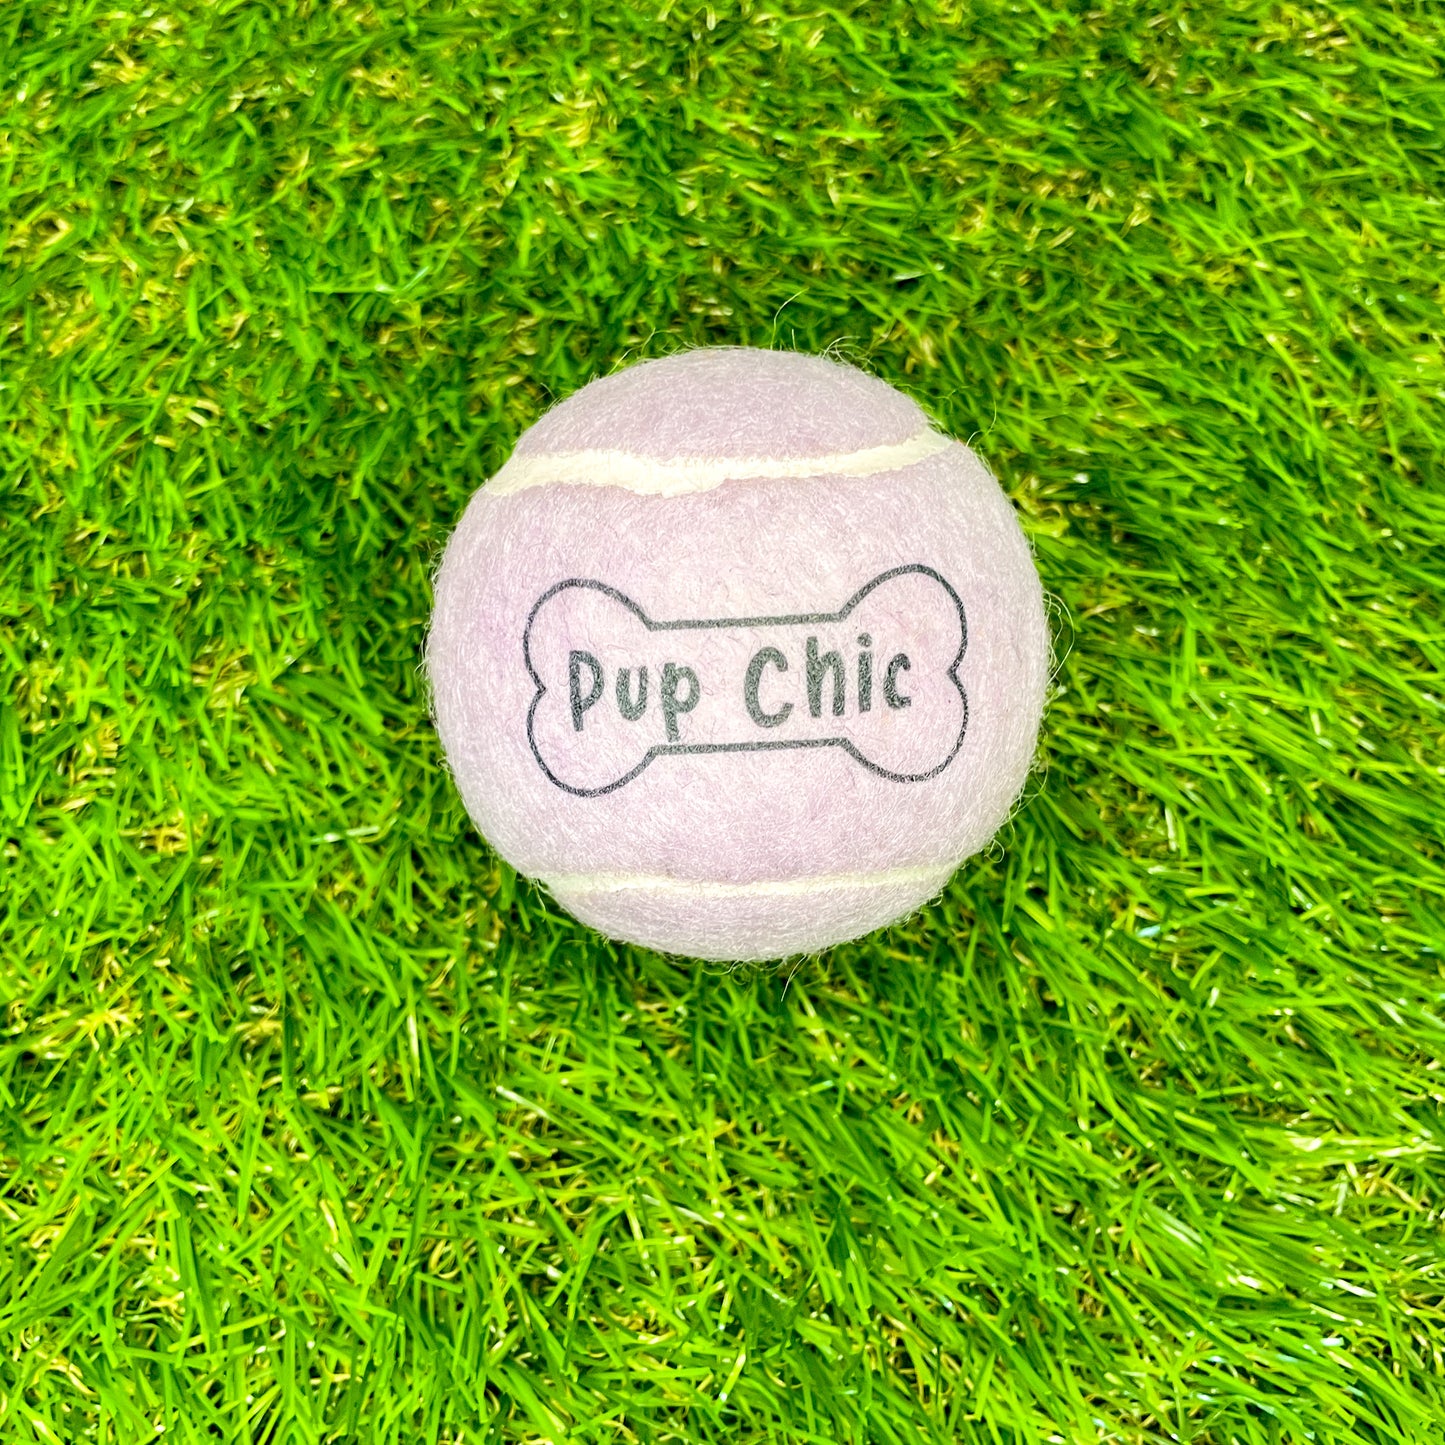 chic ball - standard size tennis ball pastel lilac